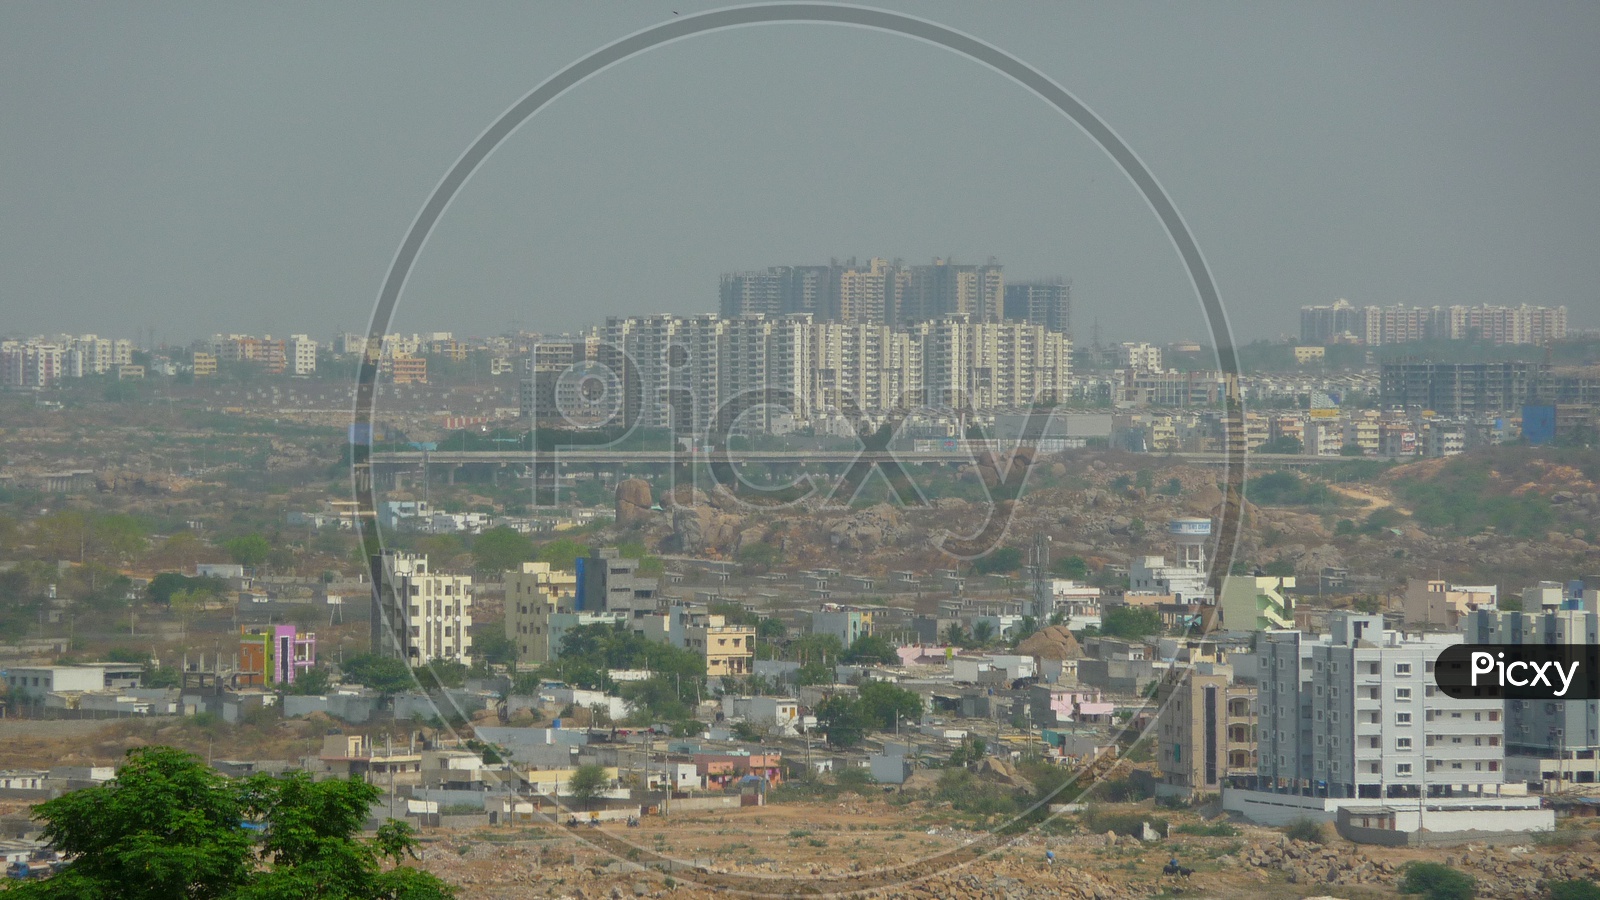 Construction of Sky Scrappers around Hyderabad